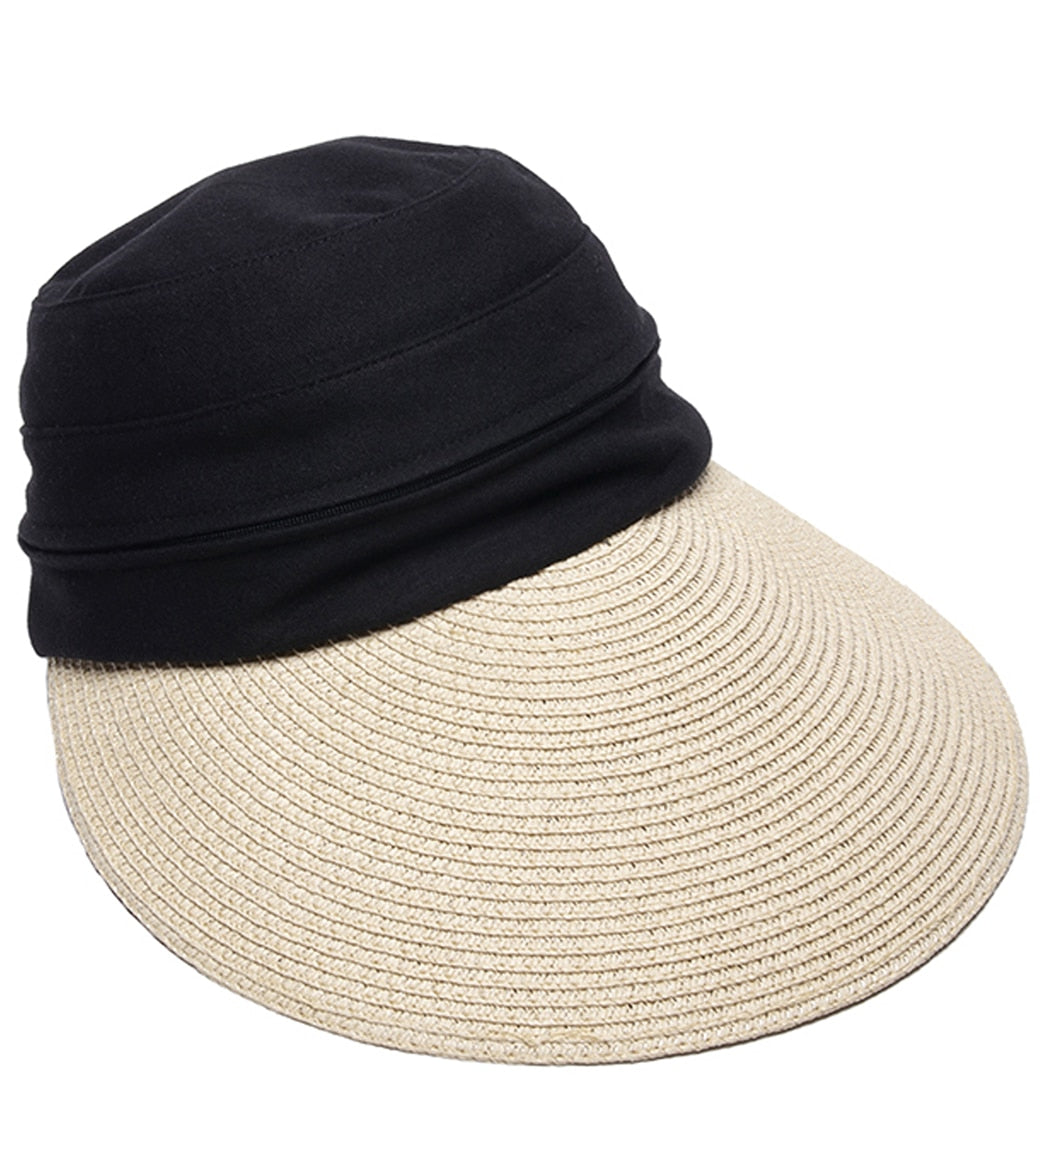 Physician Endorsed Women's Bimini Hat - Natural/Black Adjustable - Swimoutlet.com